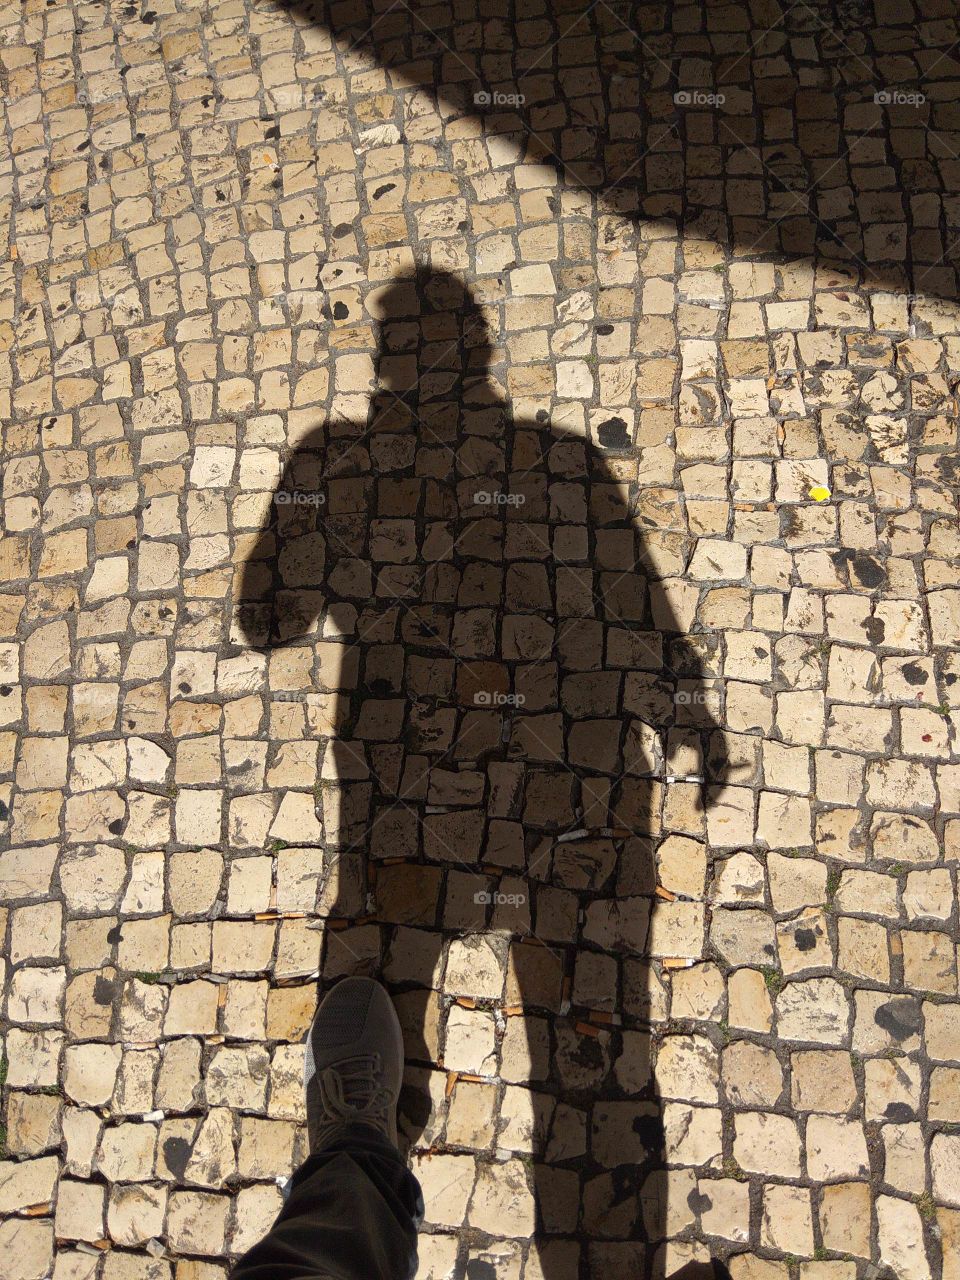 shadow man